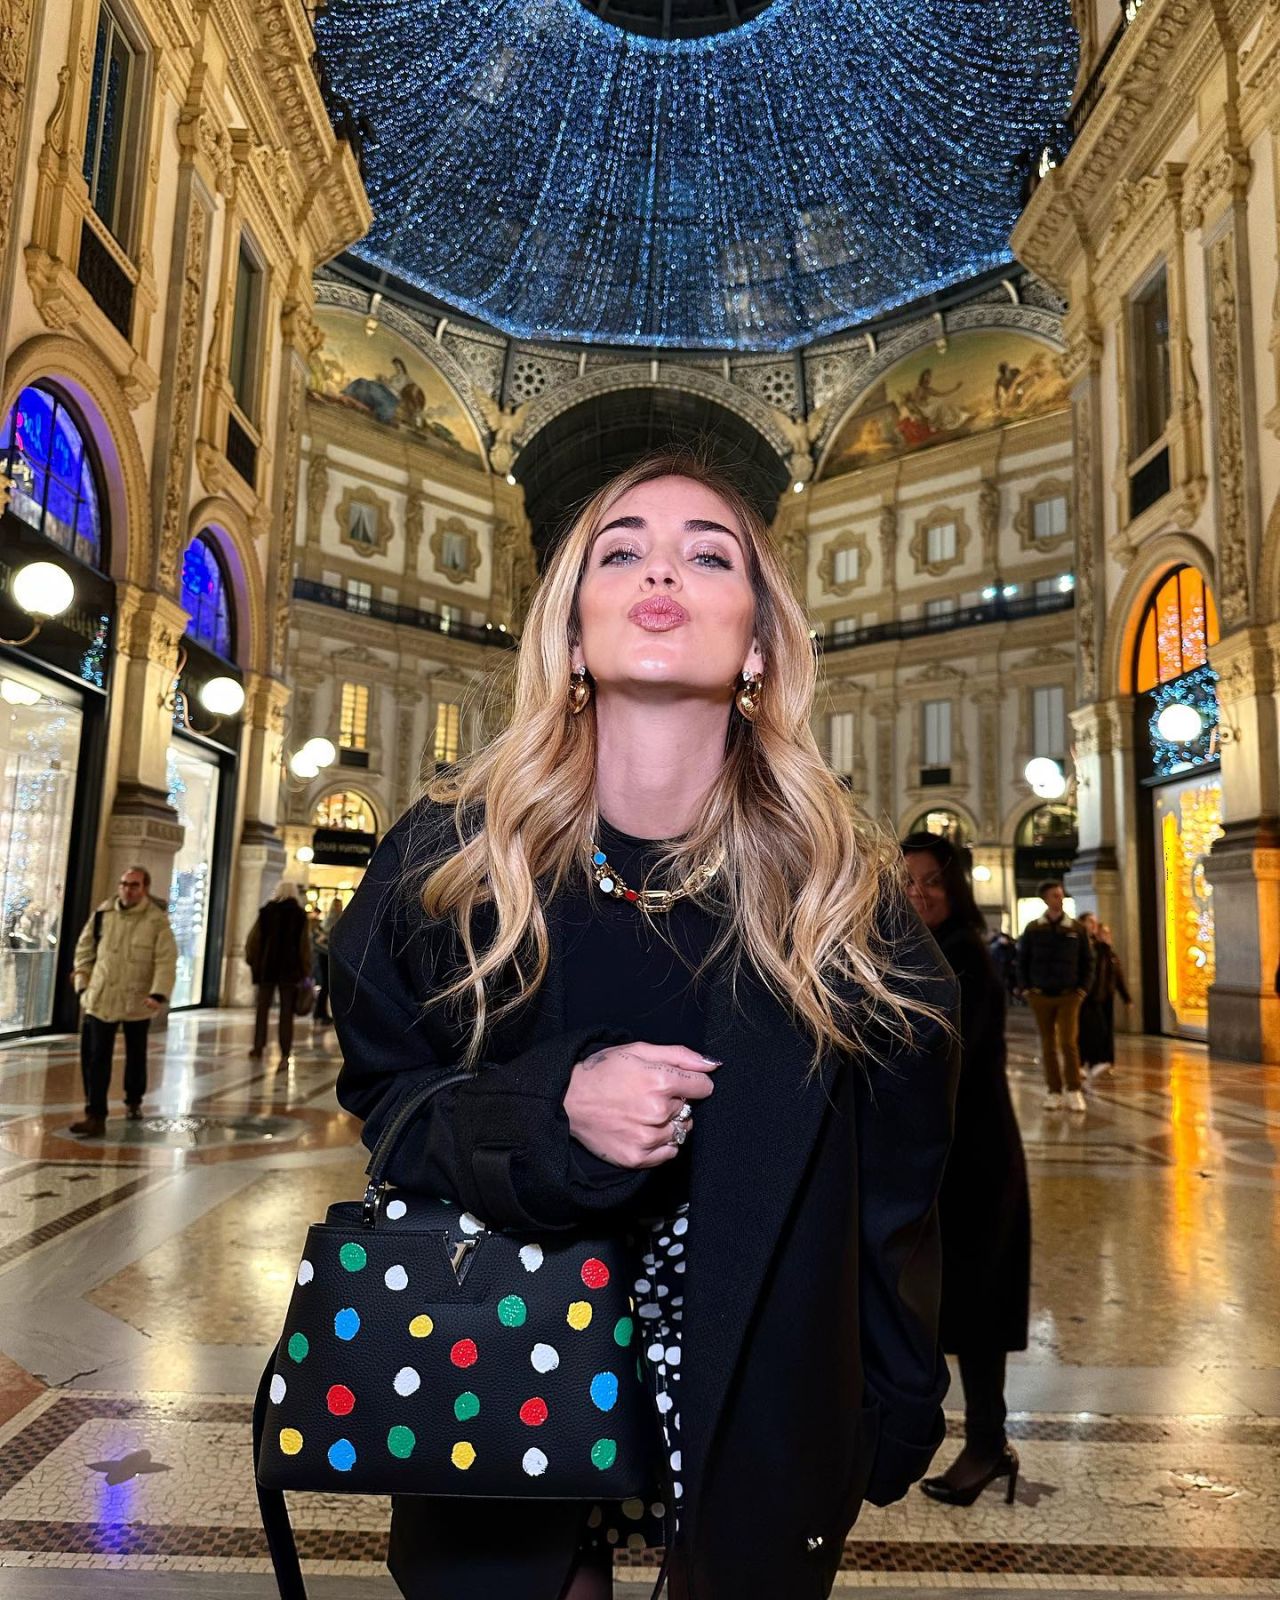 Chiara Ferragni Instagram October 7, 2021 – Star Style